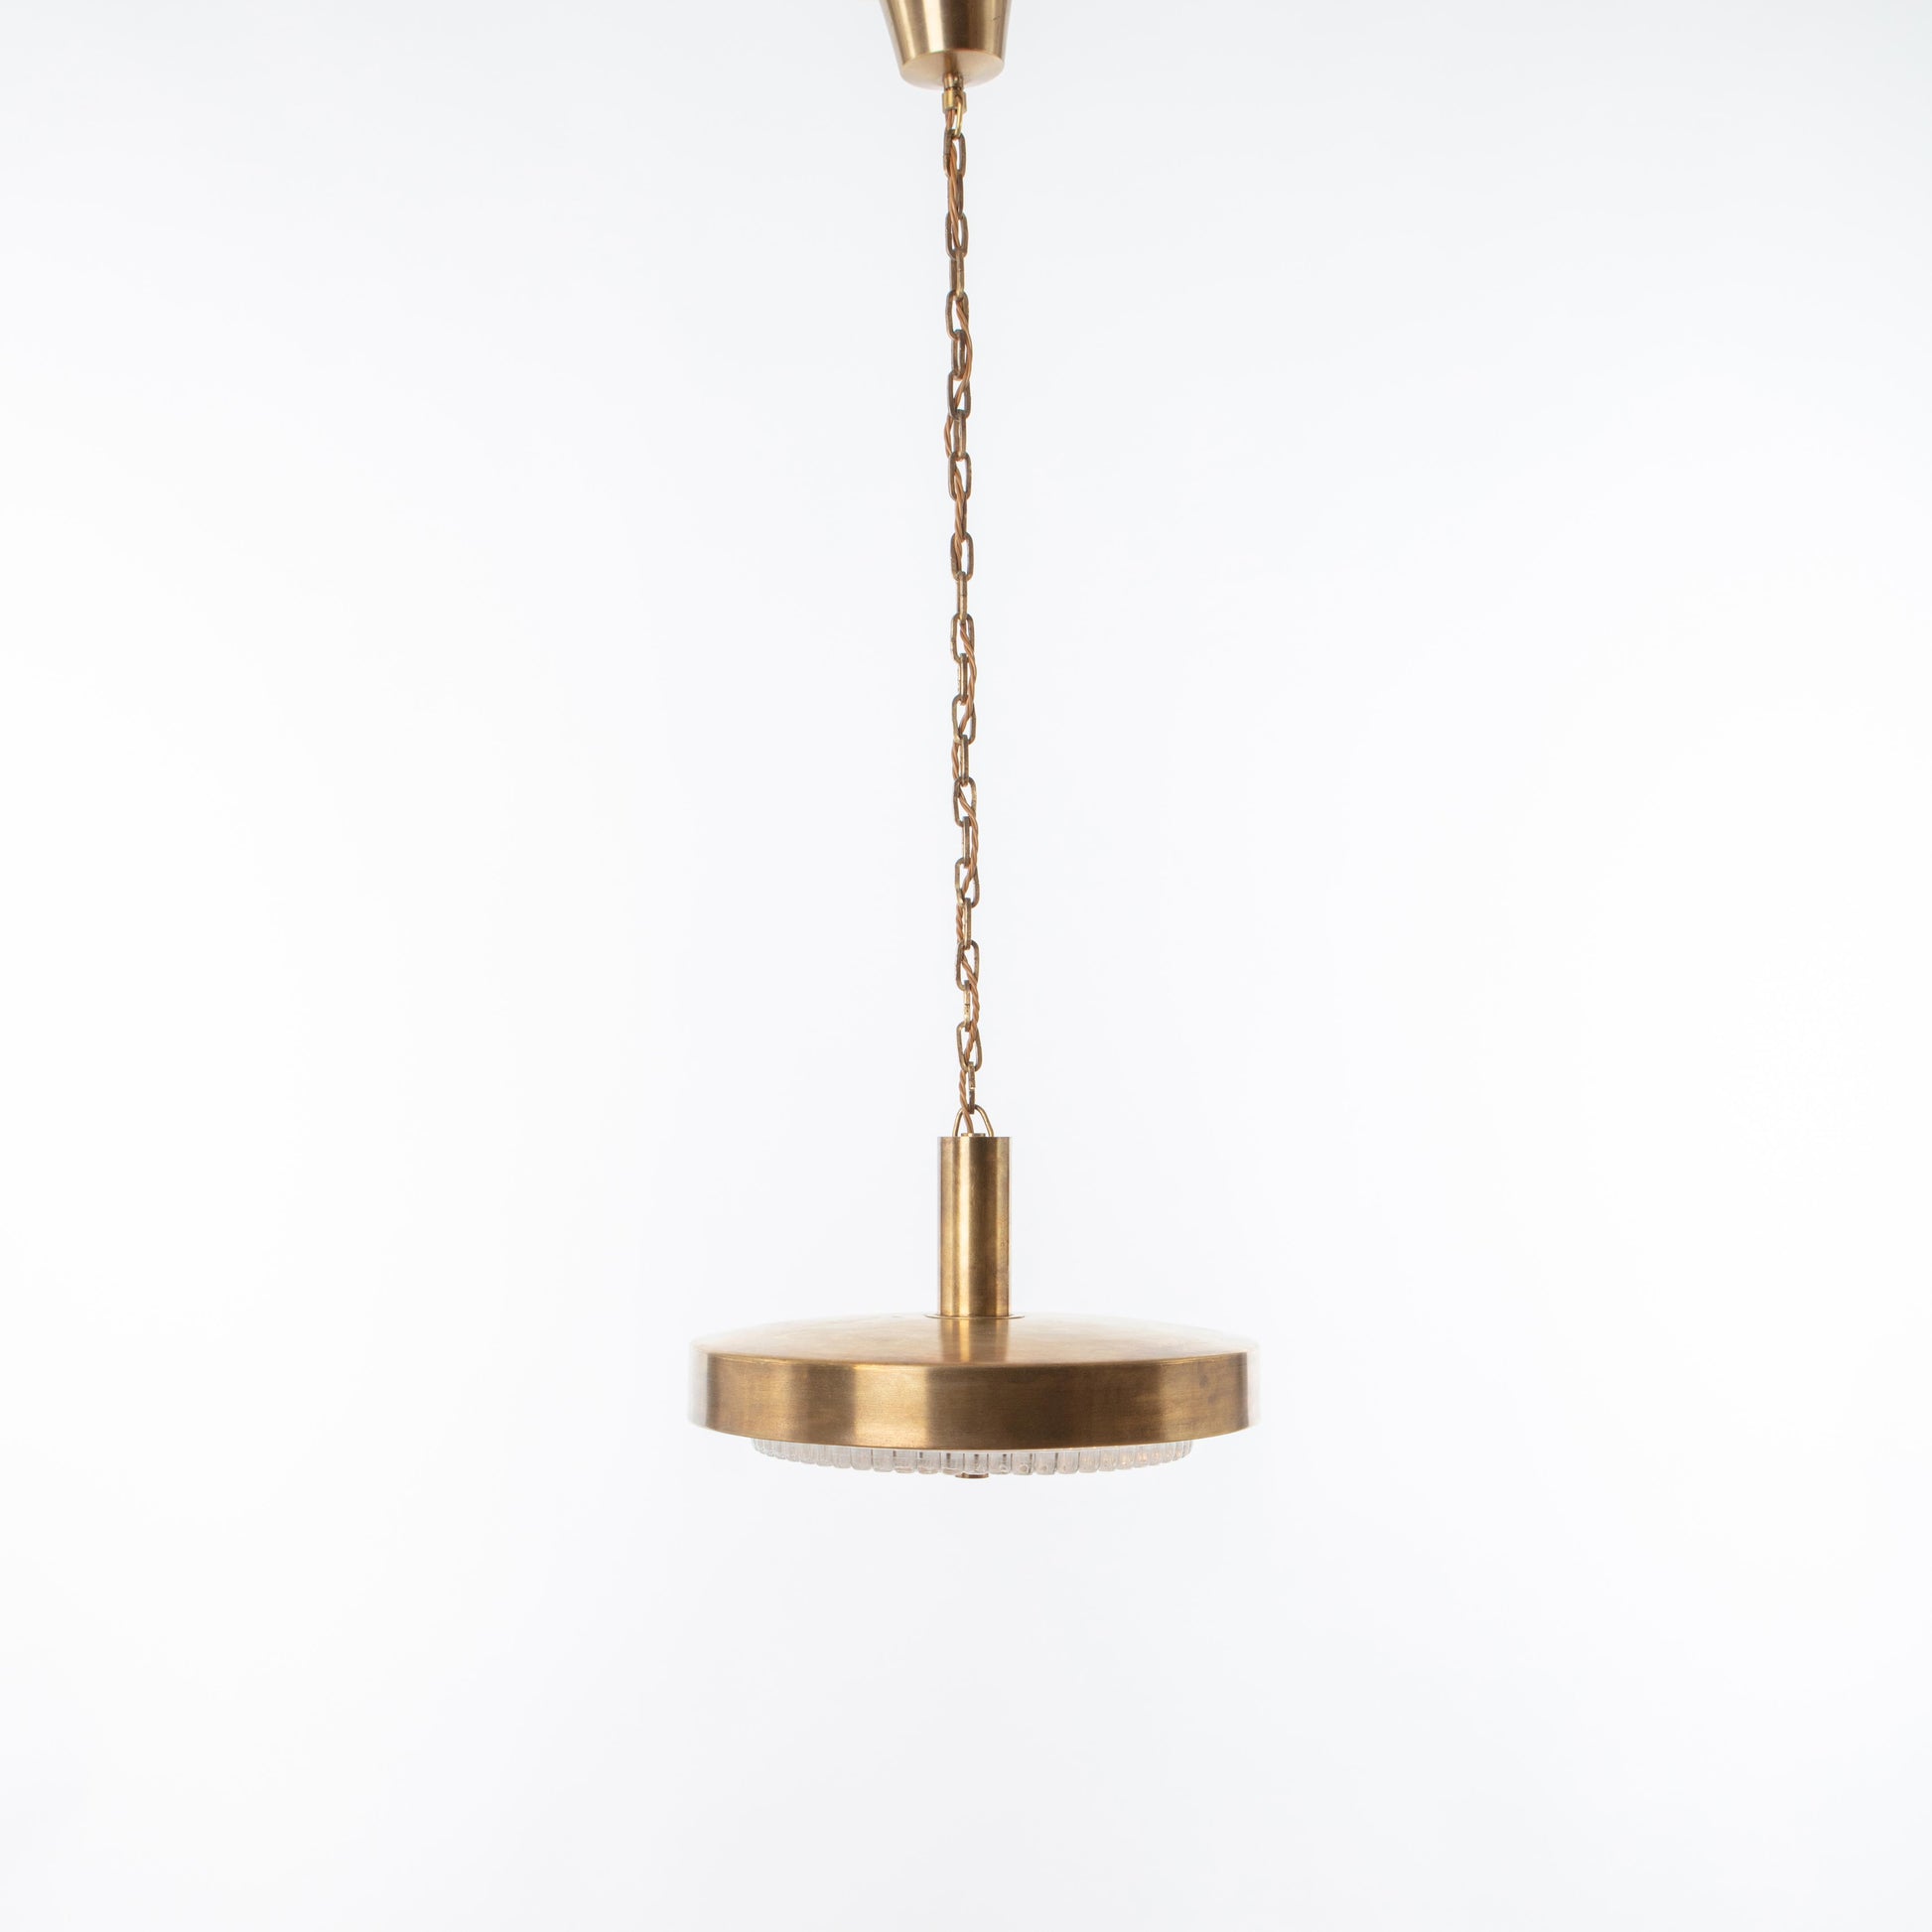 Taklampa i glas och mässing, 1960-tal. Höjd utan kedja: 25cm och diam. 39cm. Ceiling lamp in glass and brass, 1960's. Height without the chain: 25cm/9,8" and diameter: 39cm/15,4"